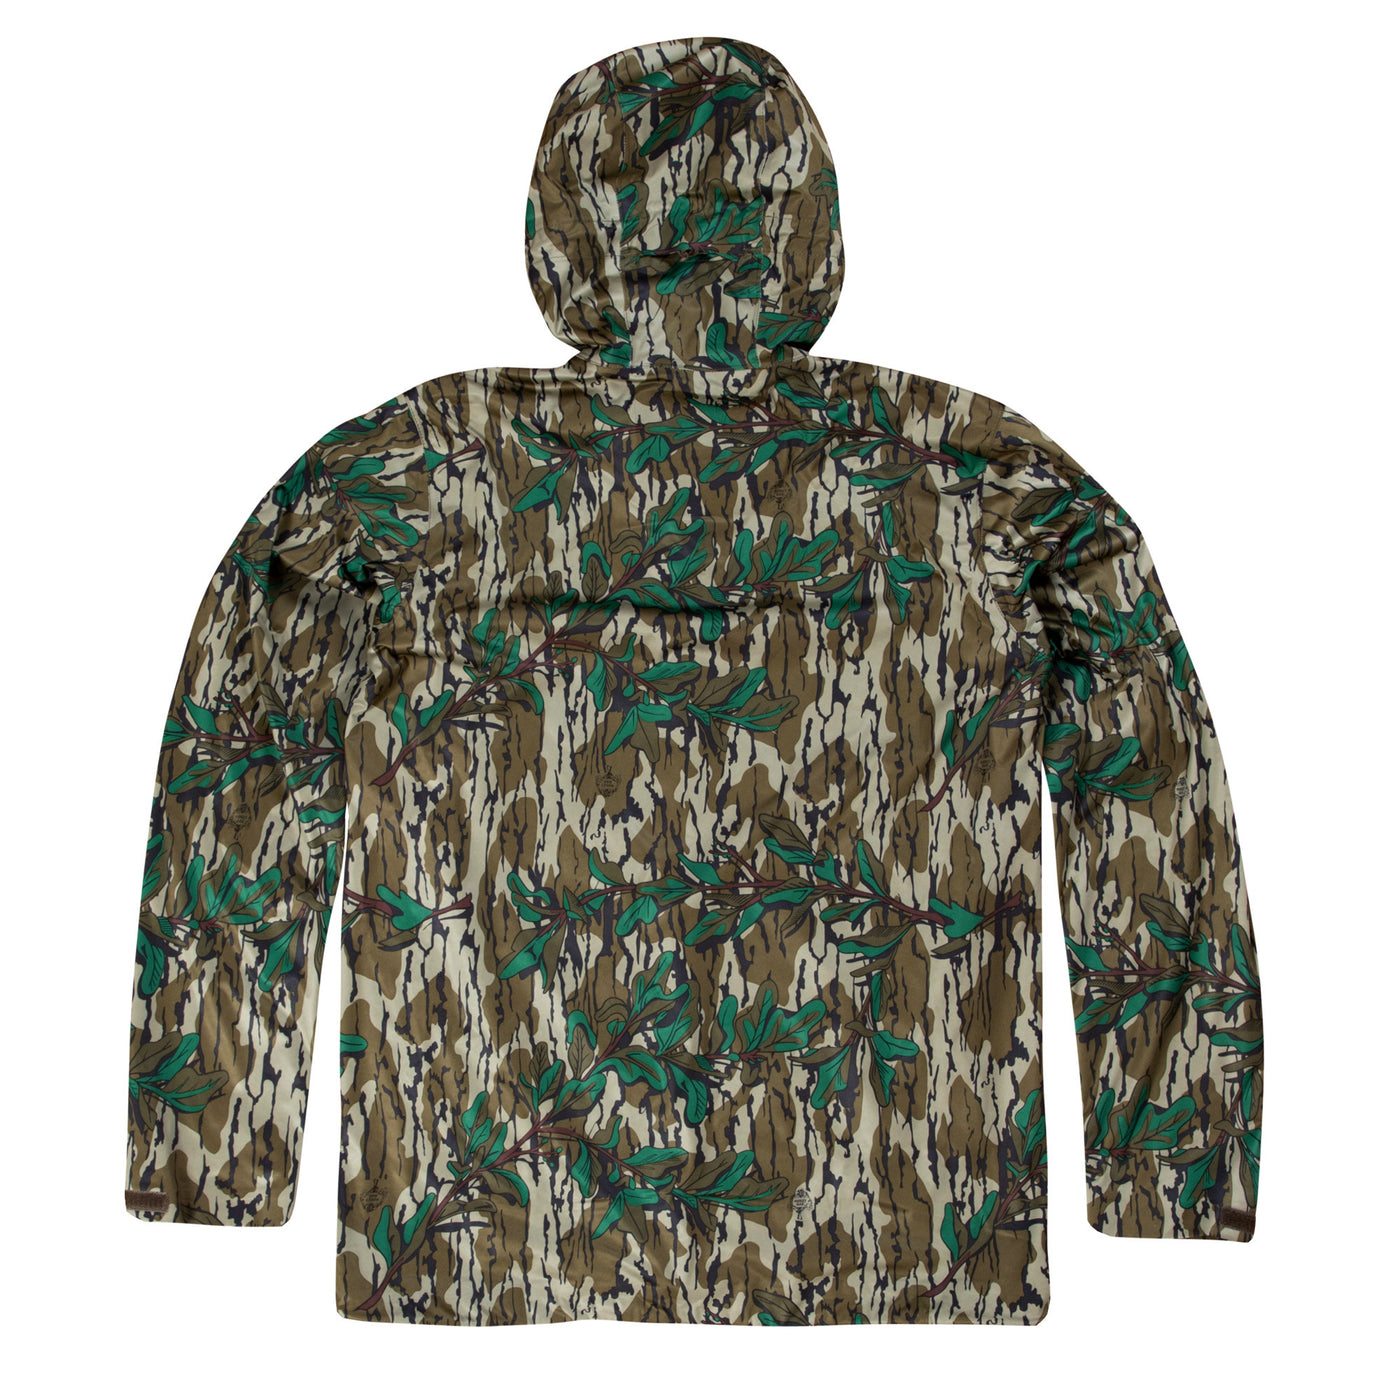 Mossy Oak Mens Fishing Rain Jacket with Hood, Arctic, Medium at   Men's Clothing store